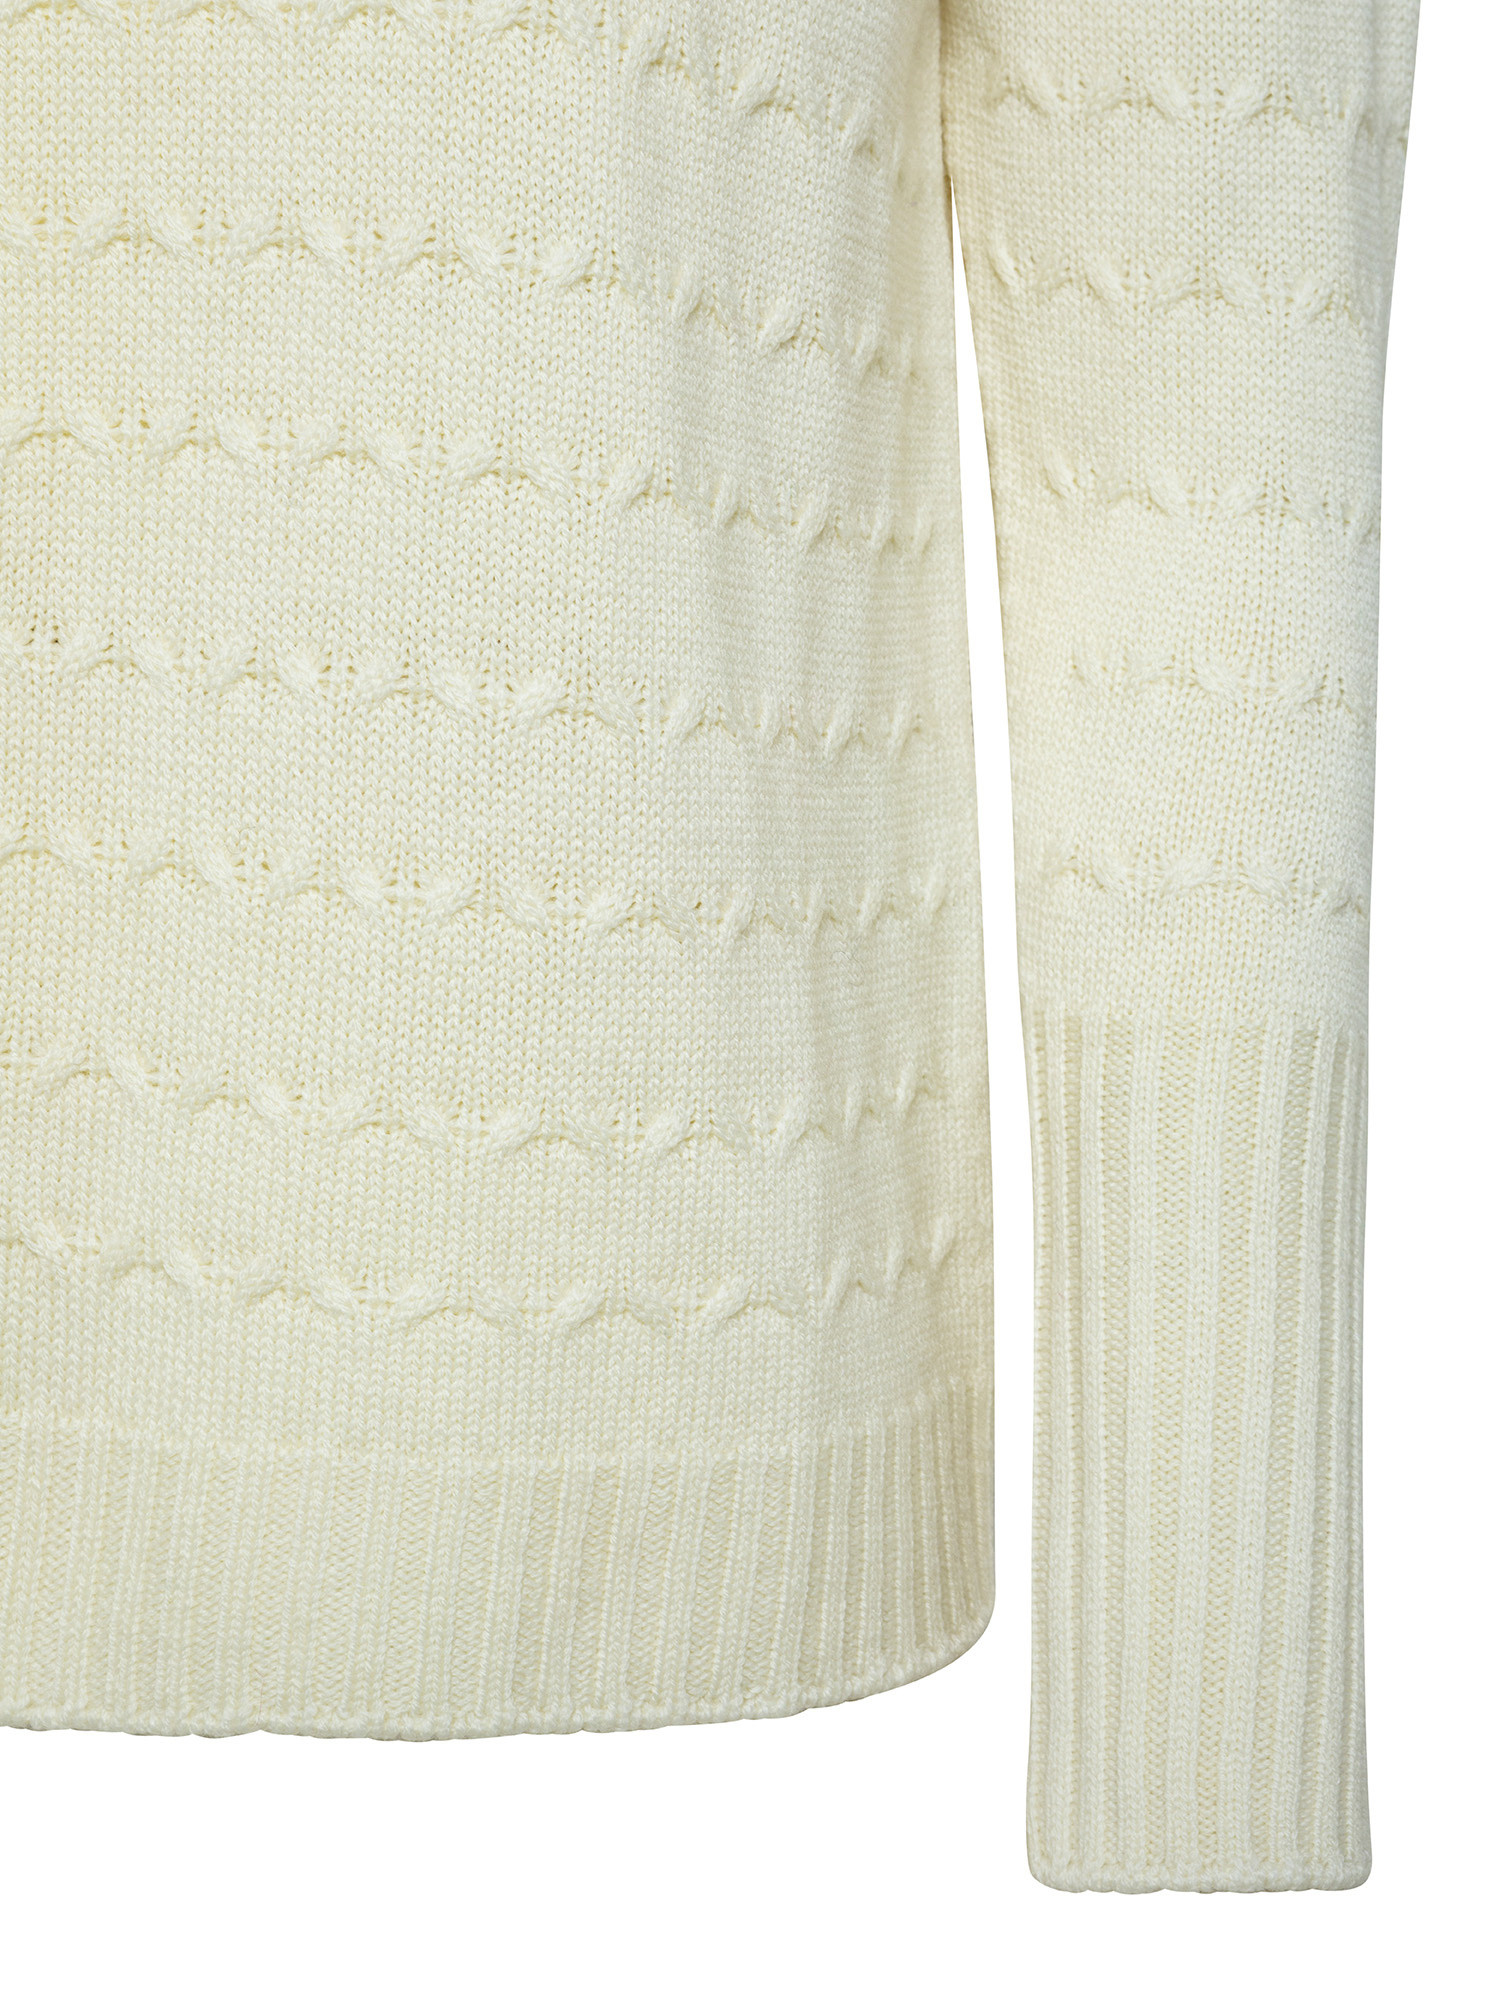 K Collection - Knitted turtleneck pullover, Ecru, large image number 2